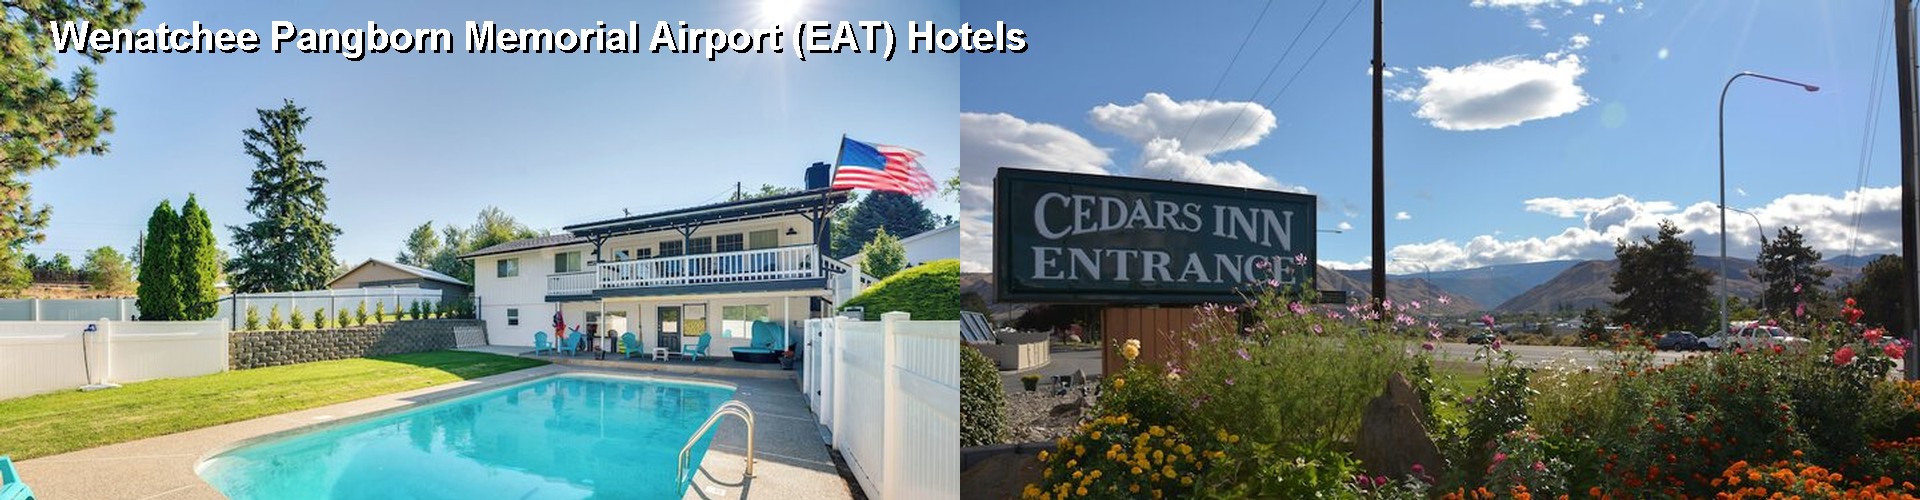 5 Best Hotels near Wenatchee Pangborn Memorial Airport (EAT)